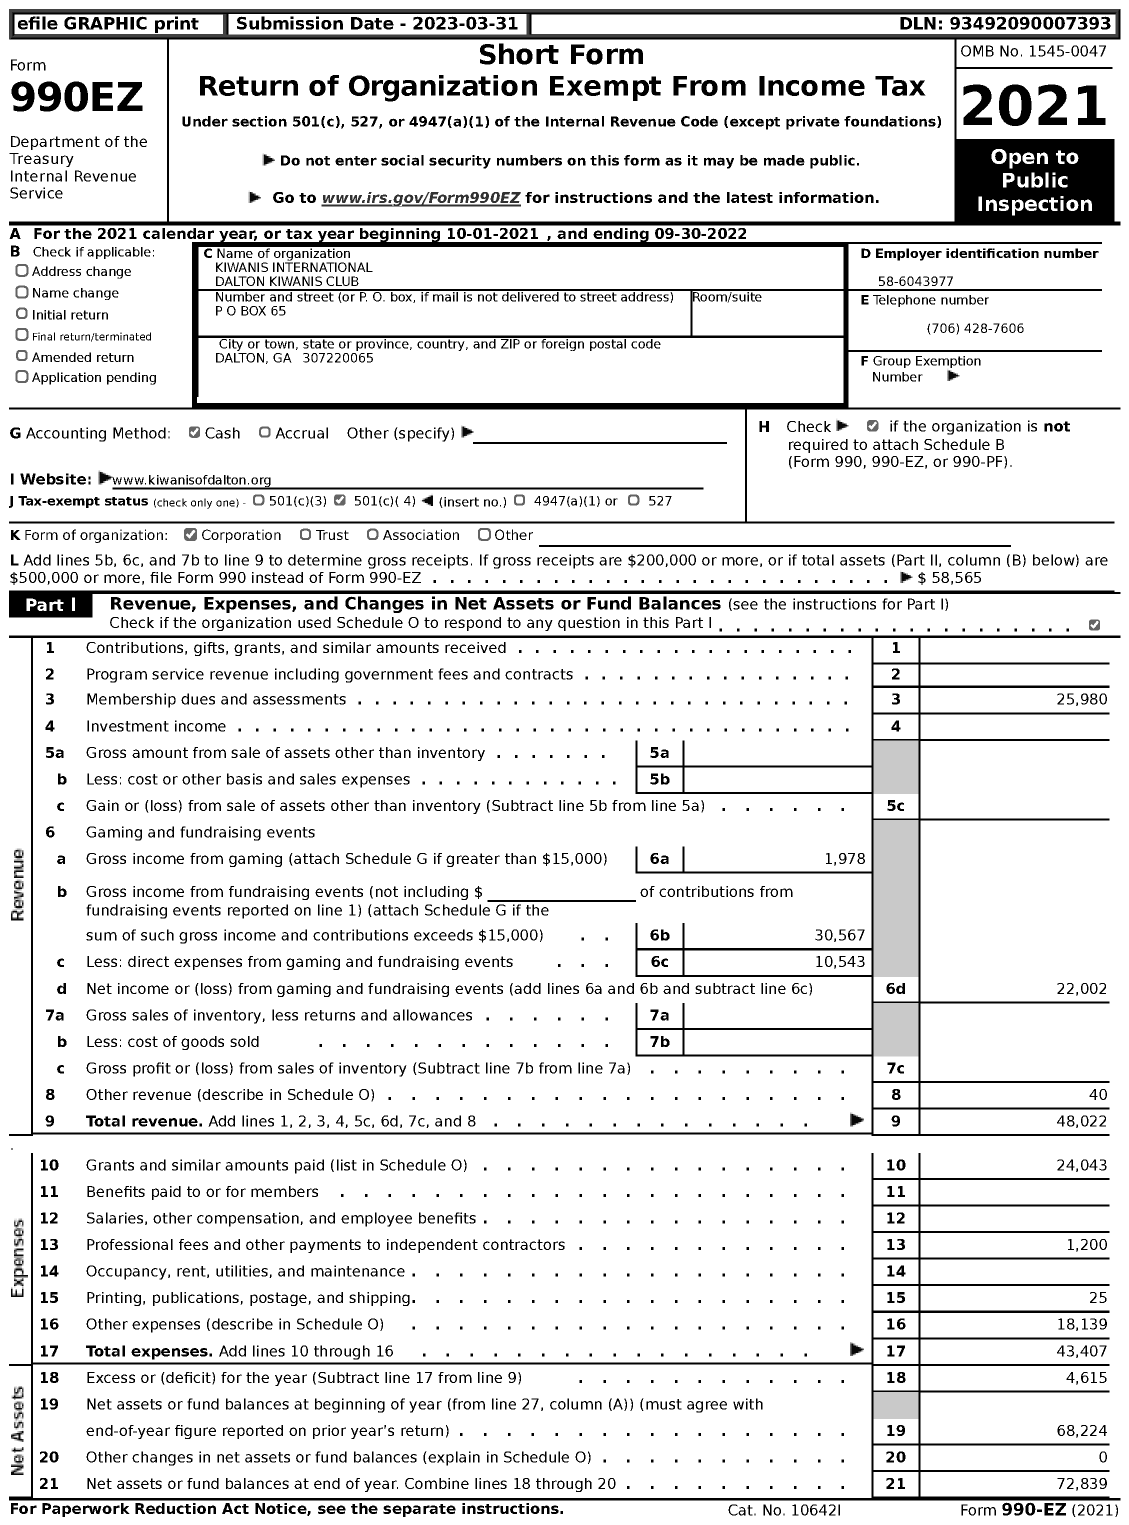 Image of first page of 2021 Form 990EZ for Kiwanis International - K04028 Dalton